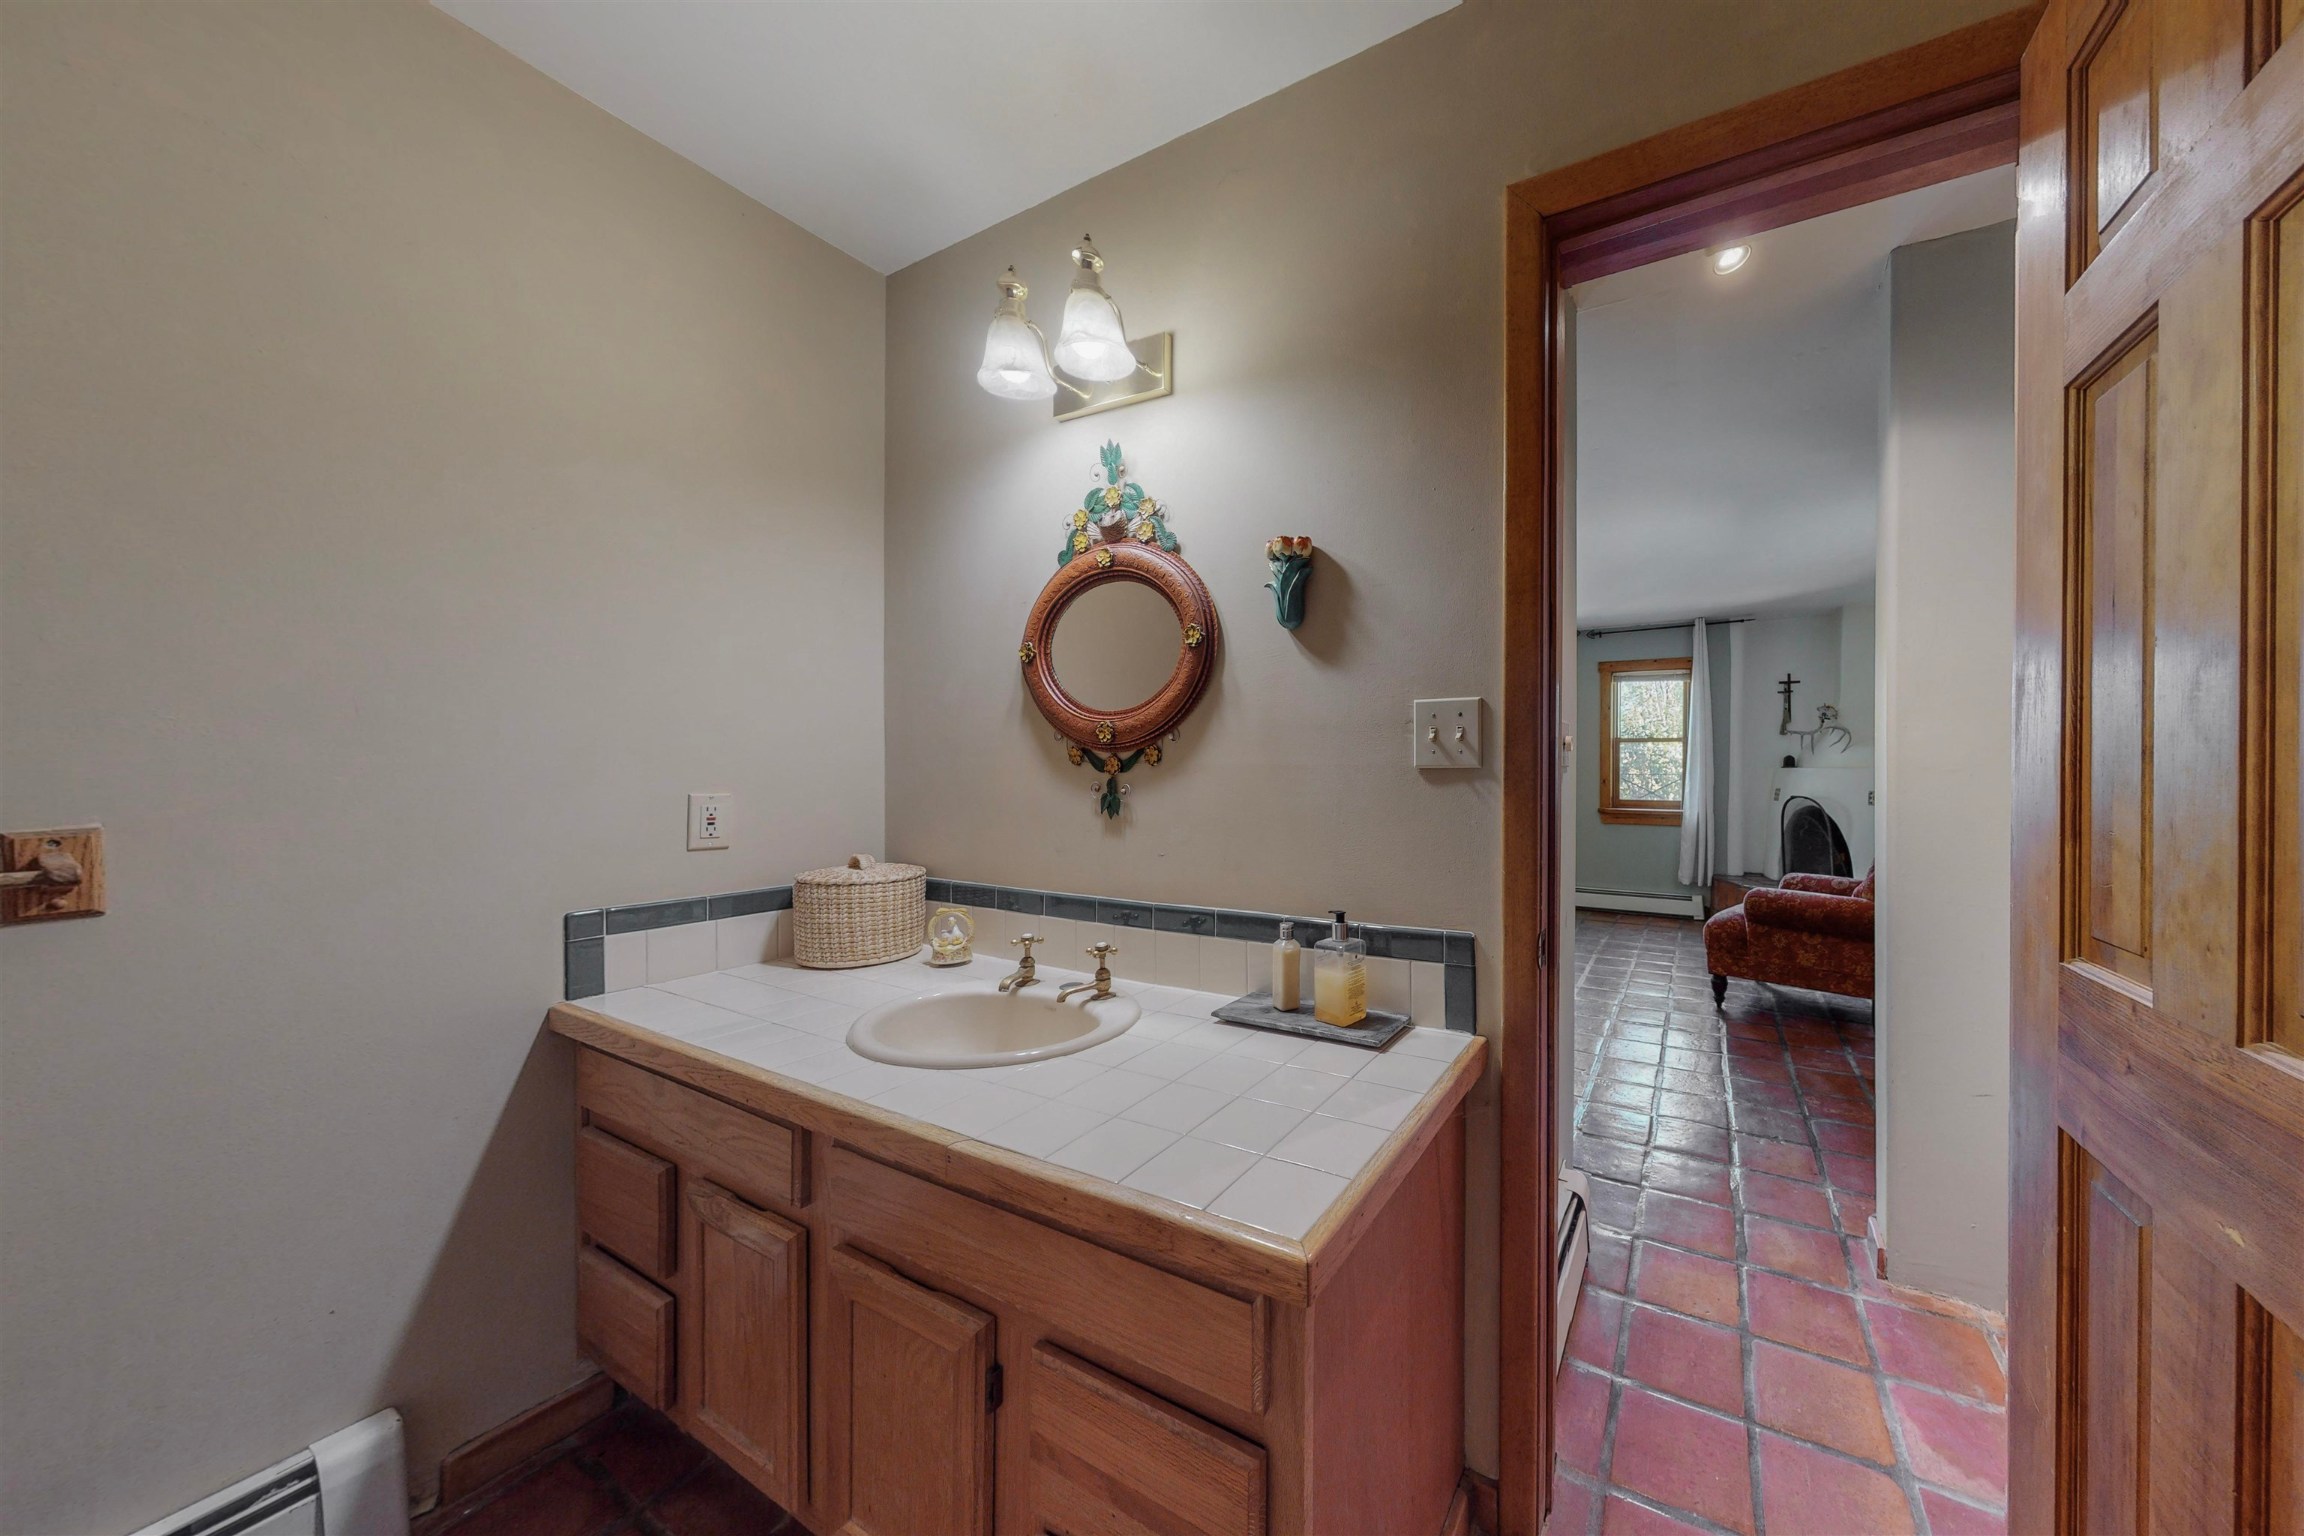 1812 CRISTOBAL, Santa Fe, New Mexico 87505, 3 Bedrooms Bedrooms, ,3 BathroomsBathrooms,Residential,For Sale,1812 CRISTOBAL,202104313